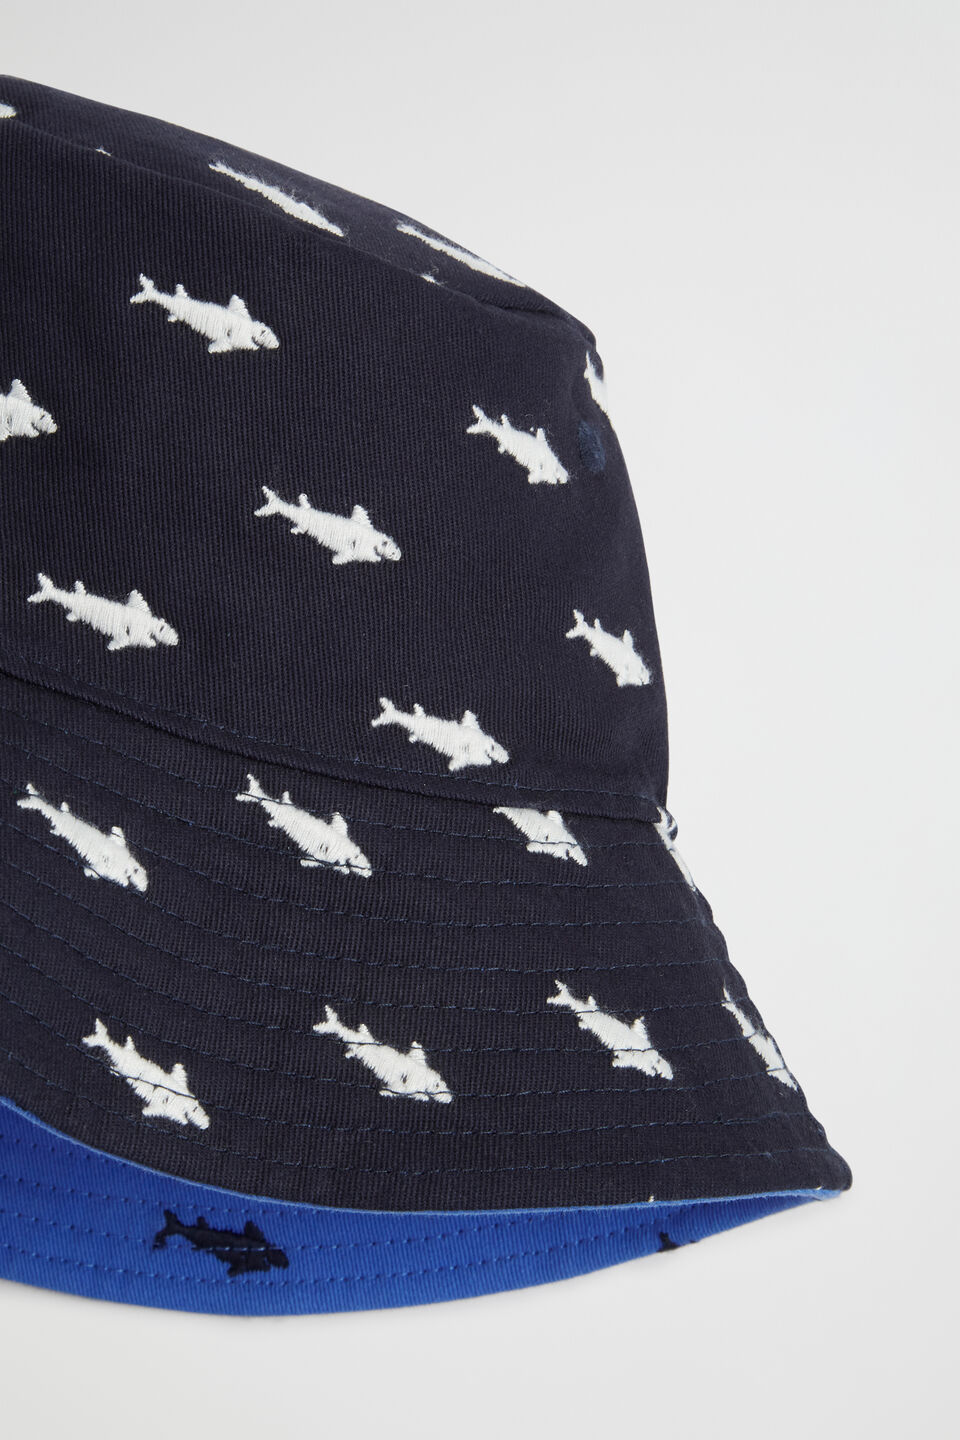 Shark Embroidered Bucket Hat  Multi